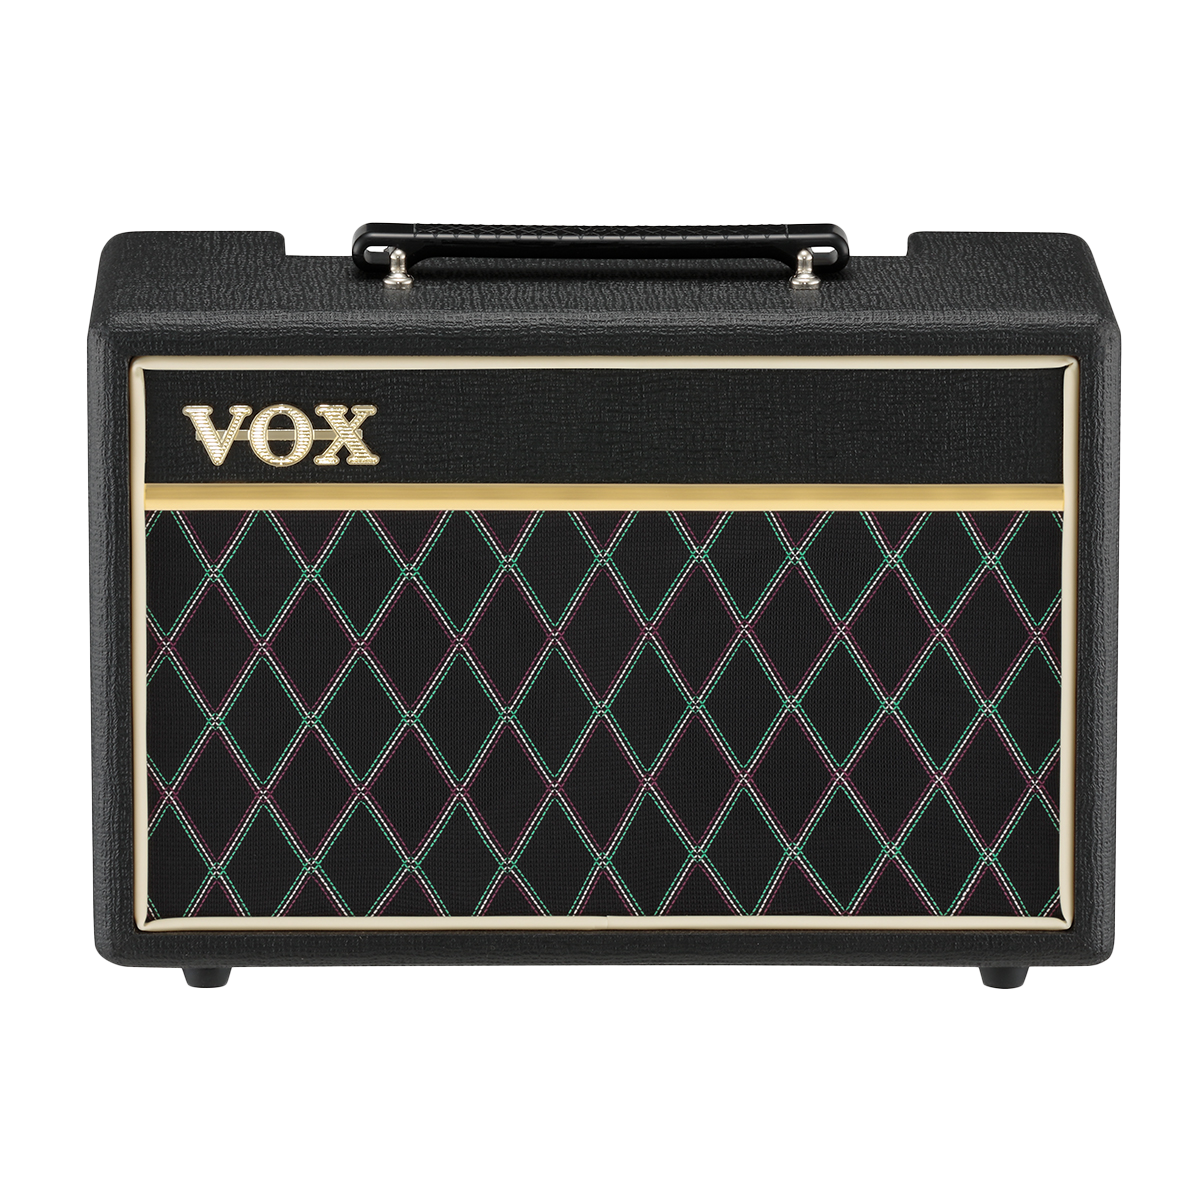 Pathfinder Bass 10 Vox Amp Shop